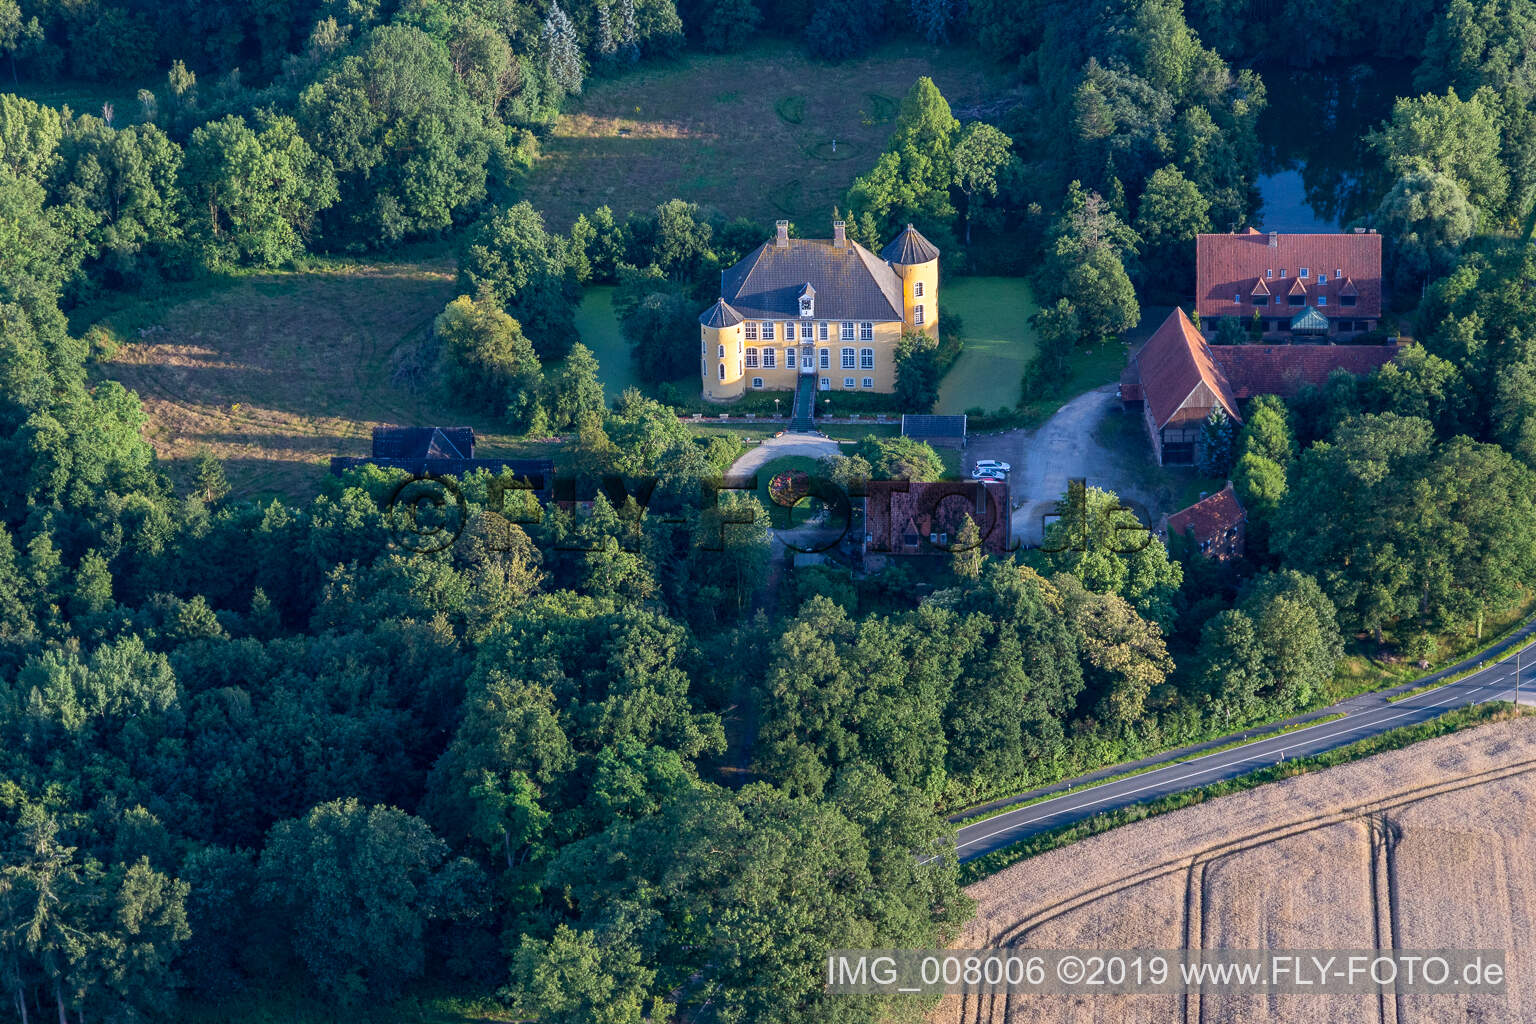 Aerial view of Hotel Schloss Diepenbrock in Bocholt in the state North Rhine-Westphalia, Germany